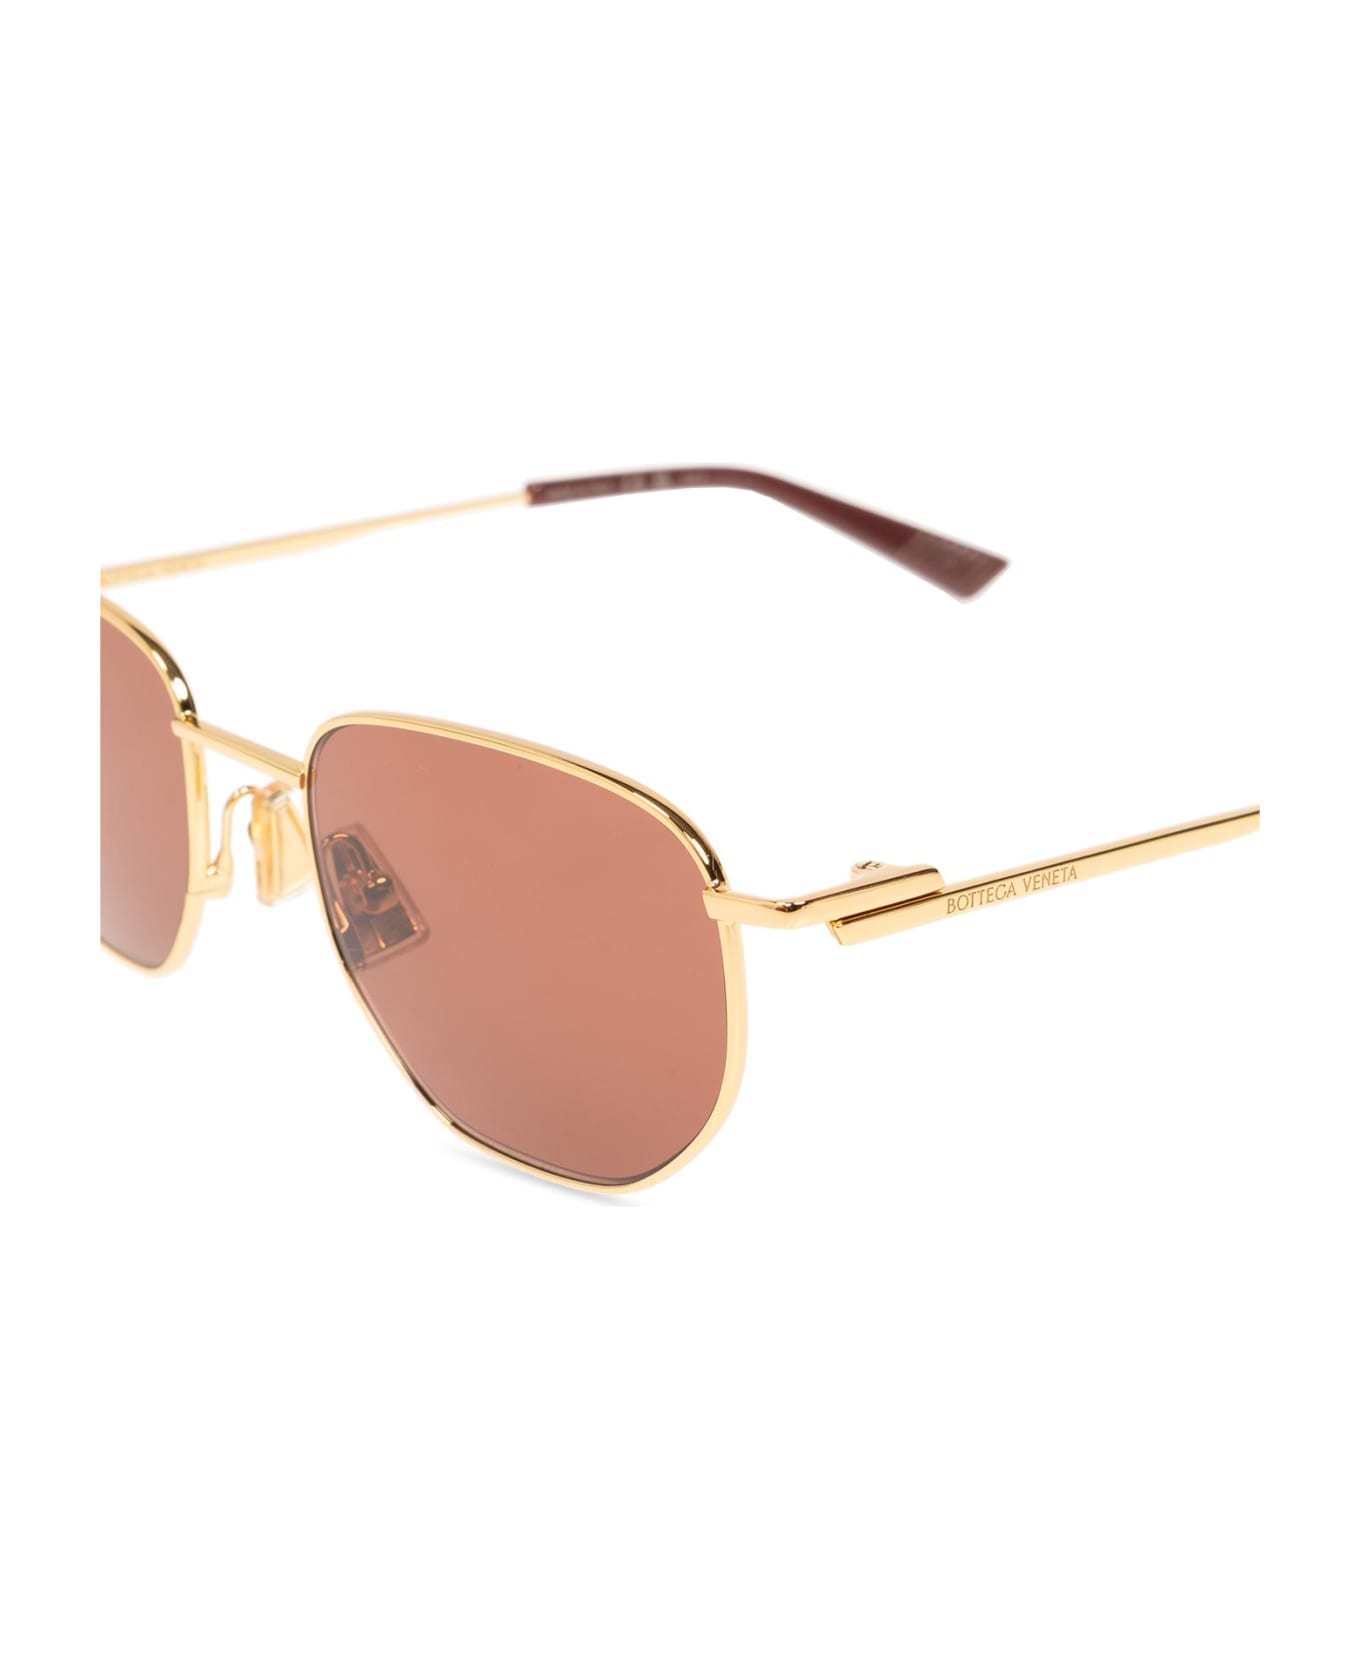 Bottega Veneta Sunglasses - Gold Yellow サングラス